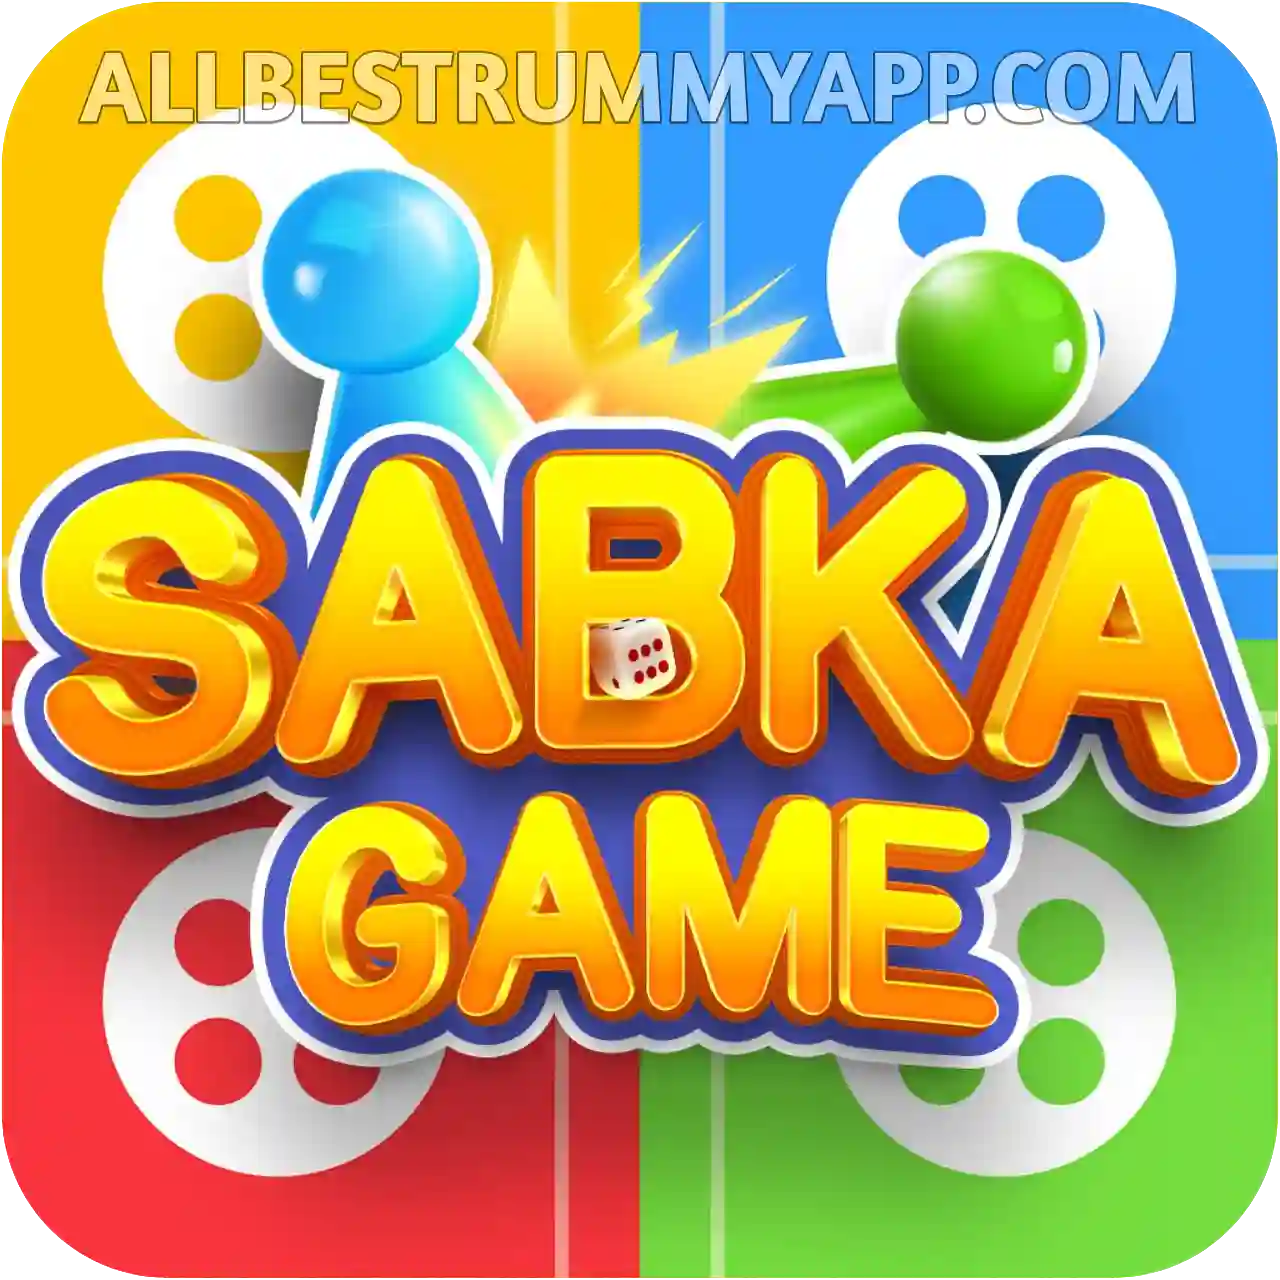 Sabka Game Logo - All Best Rummy App